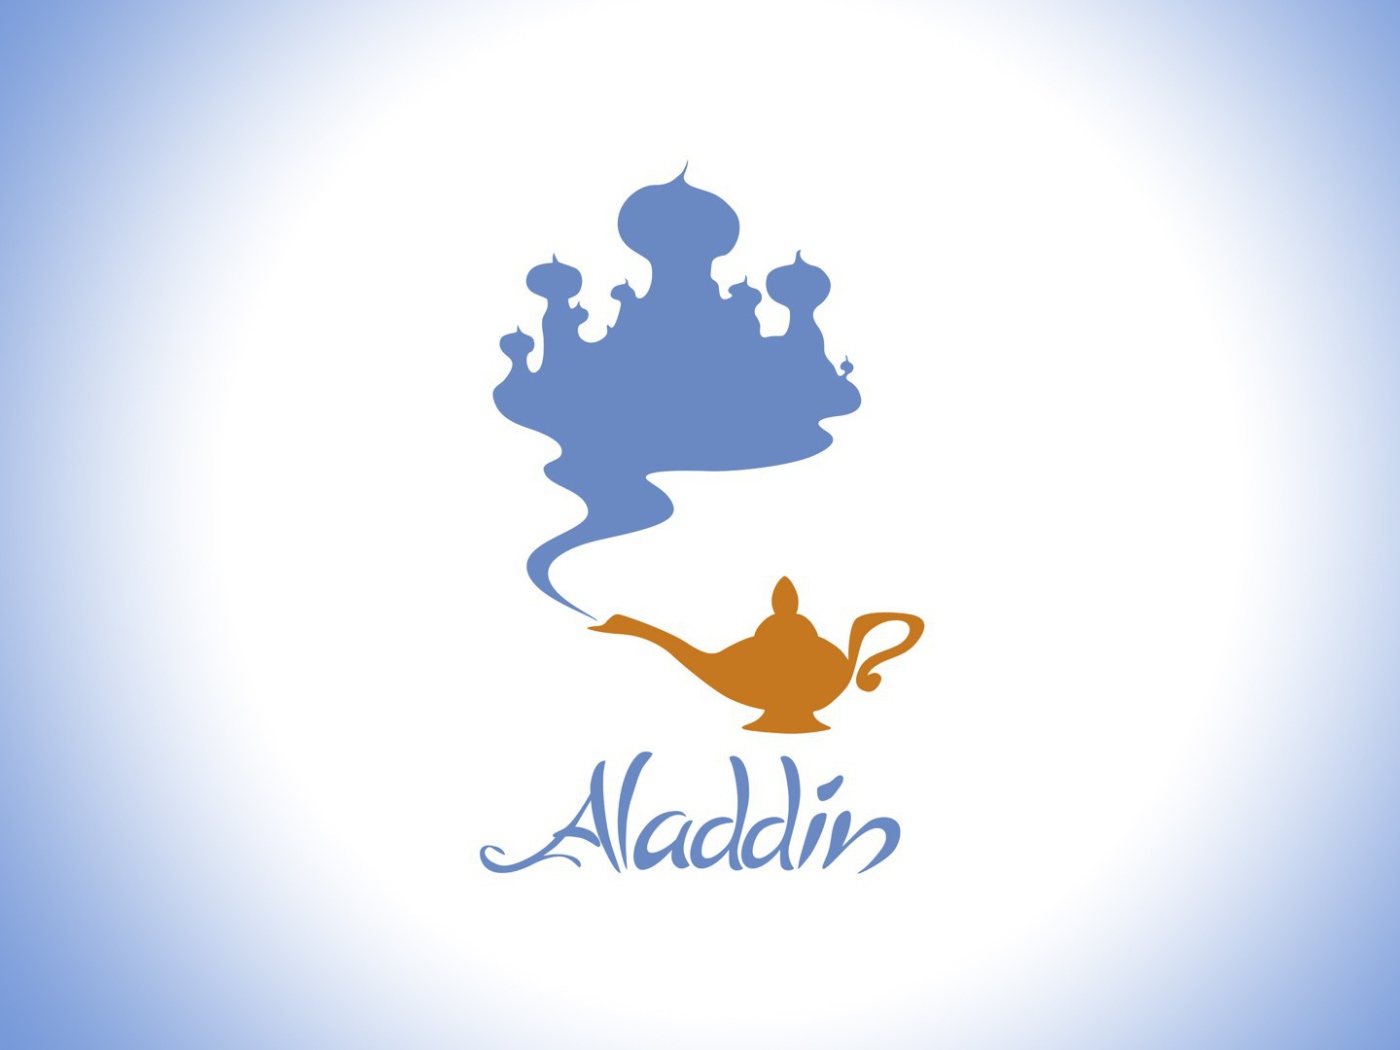 The Film Aladdin